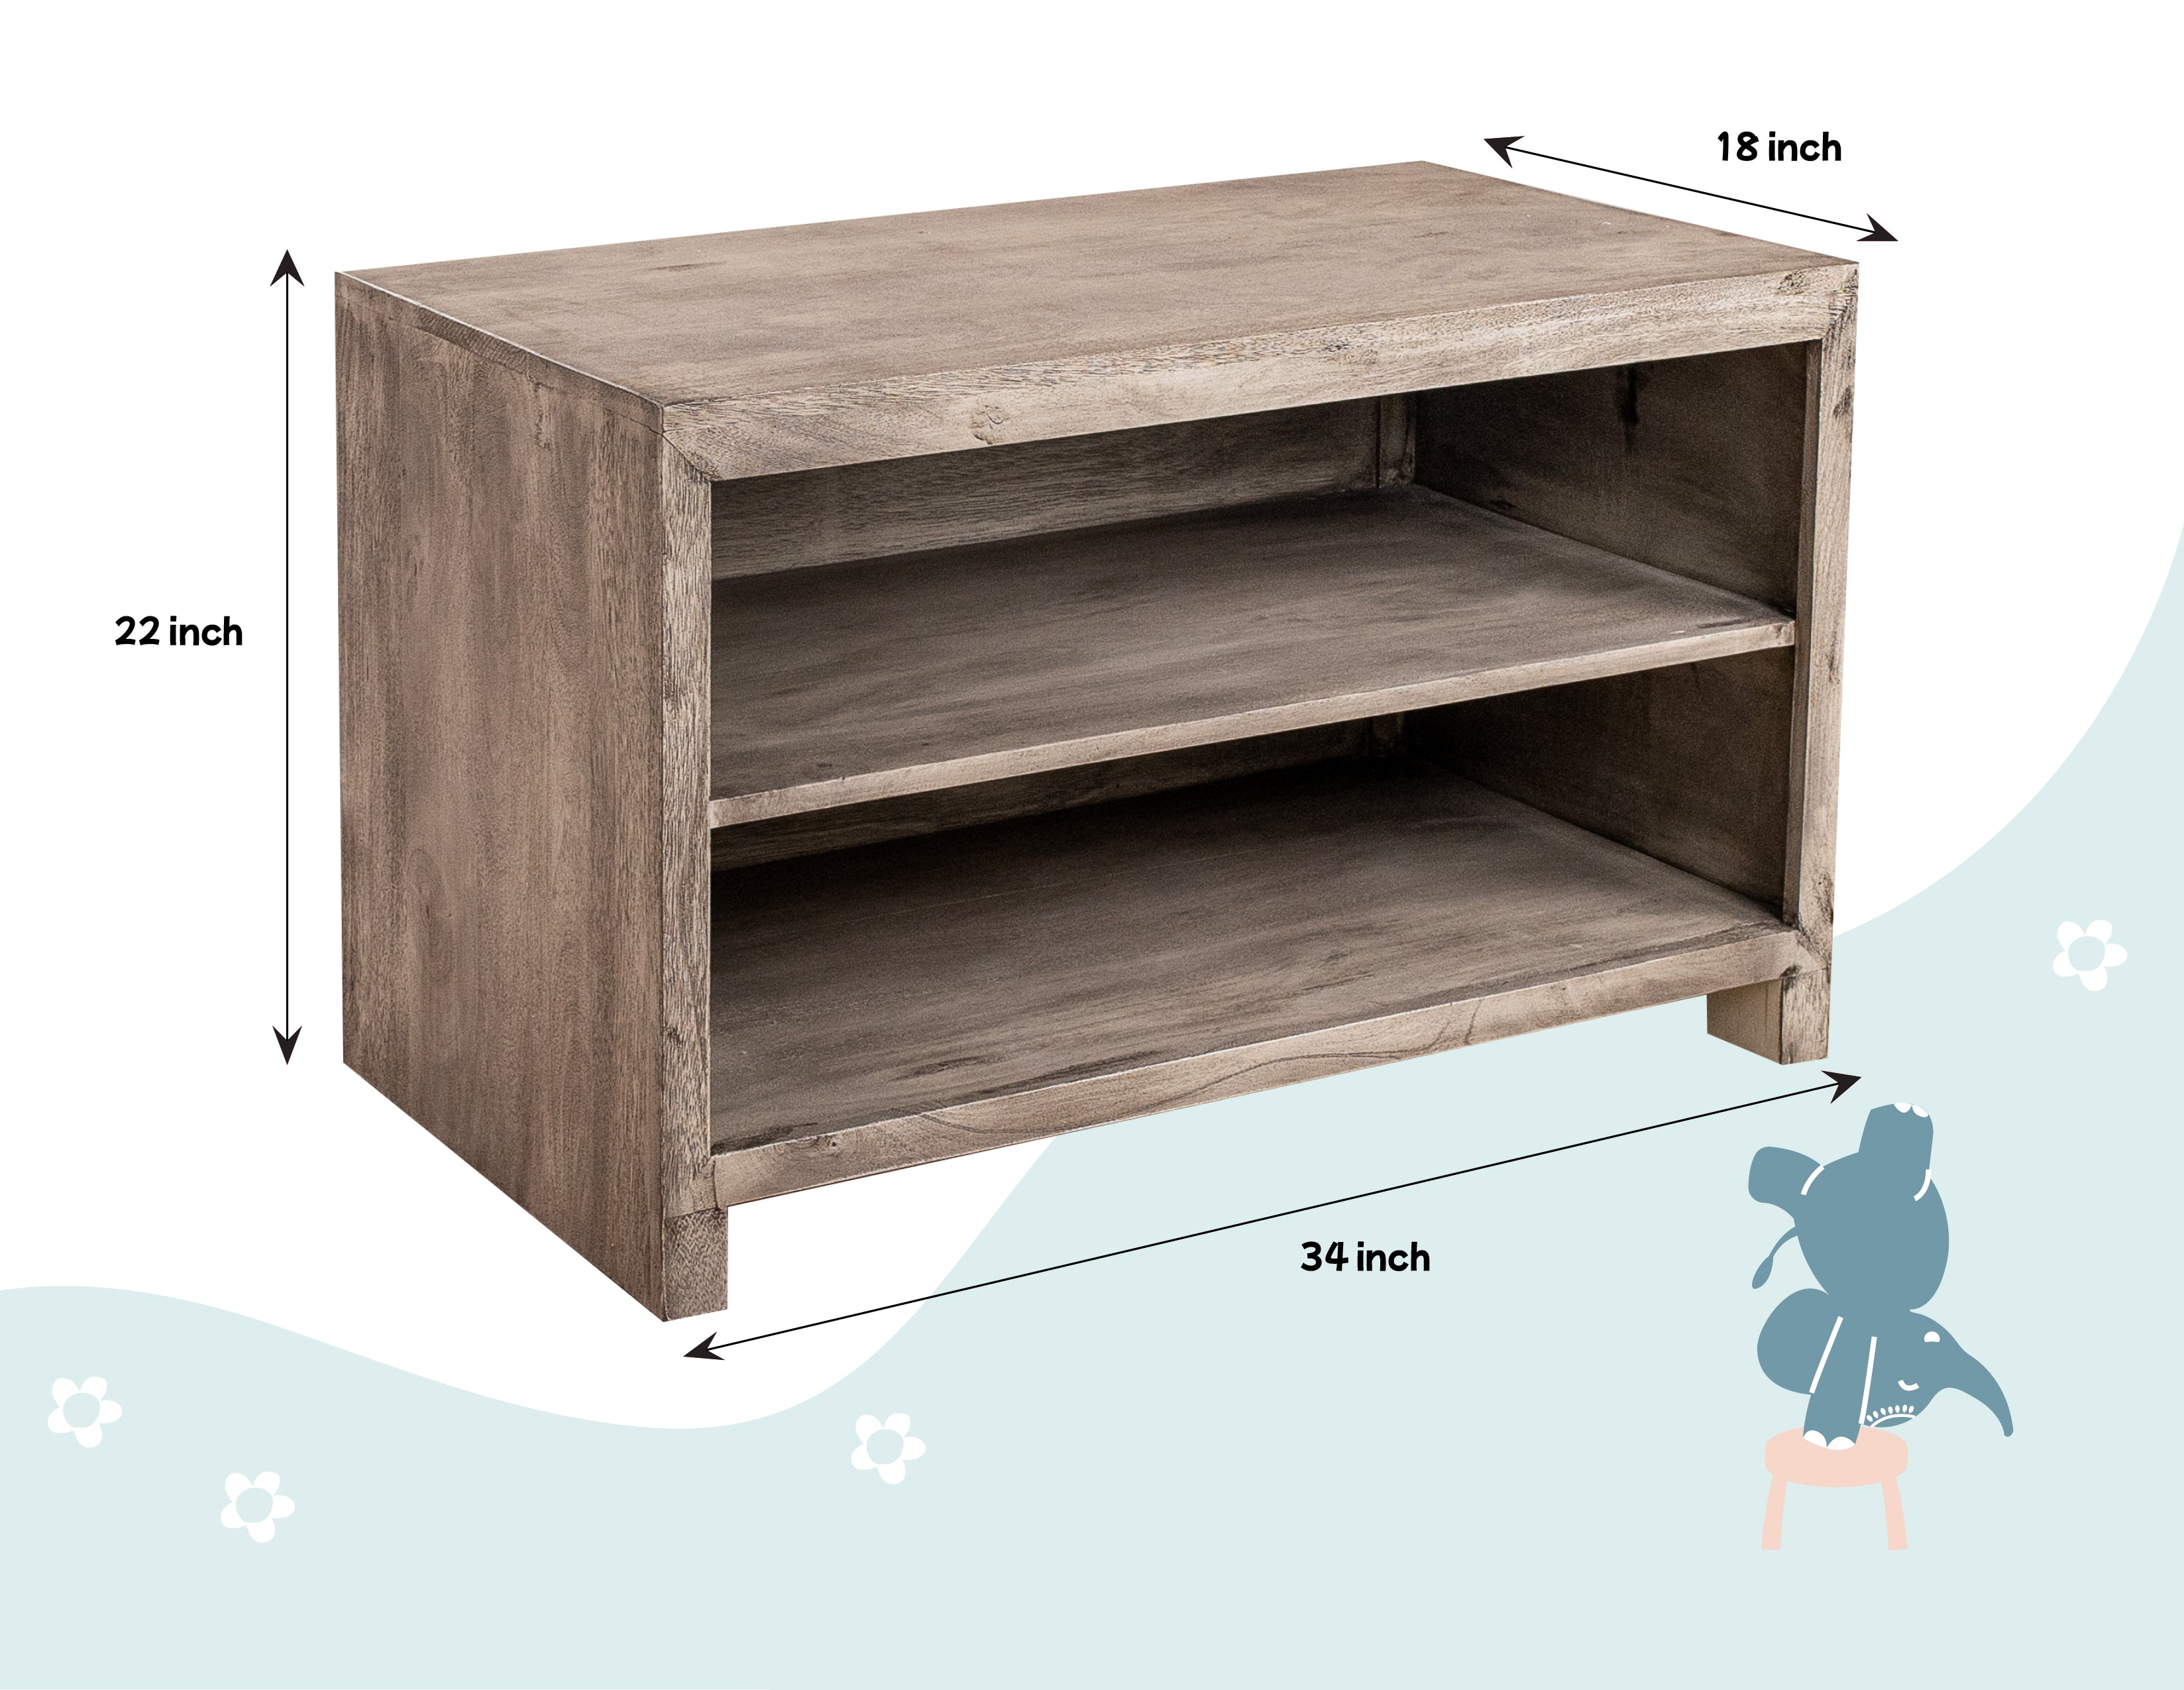 Montessori Storage Unit - Ash Grey